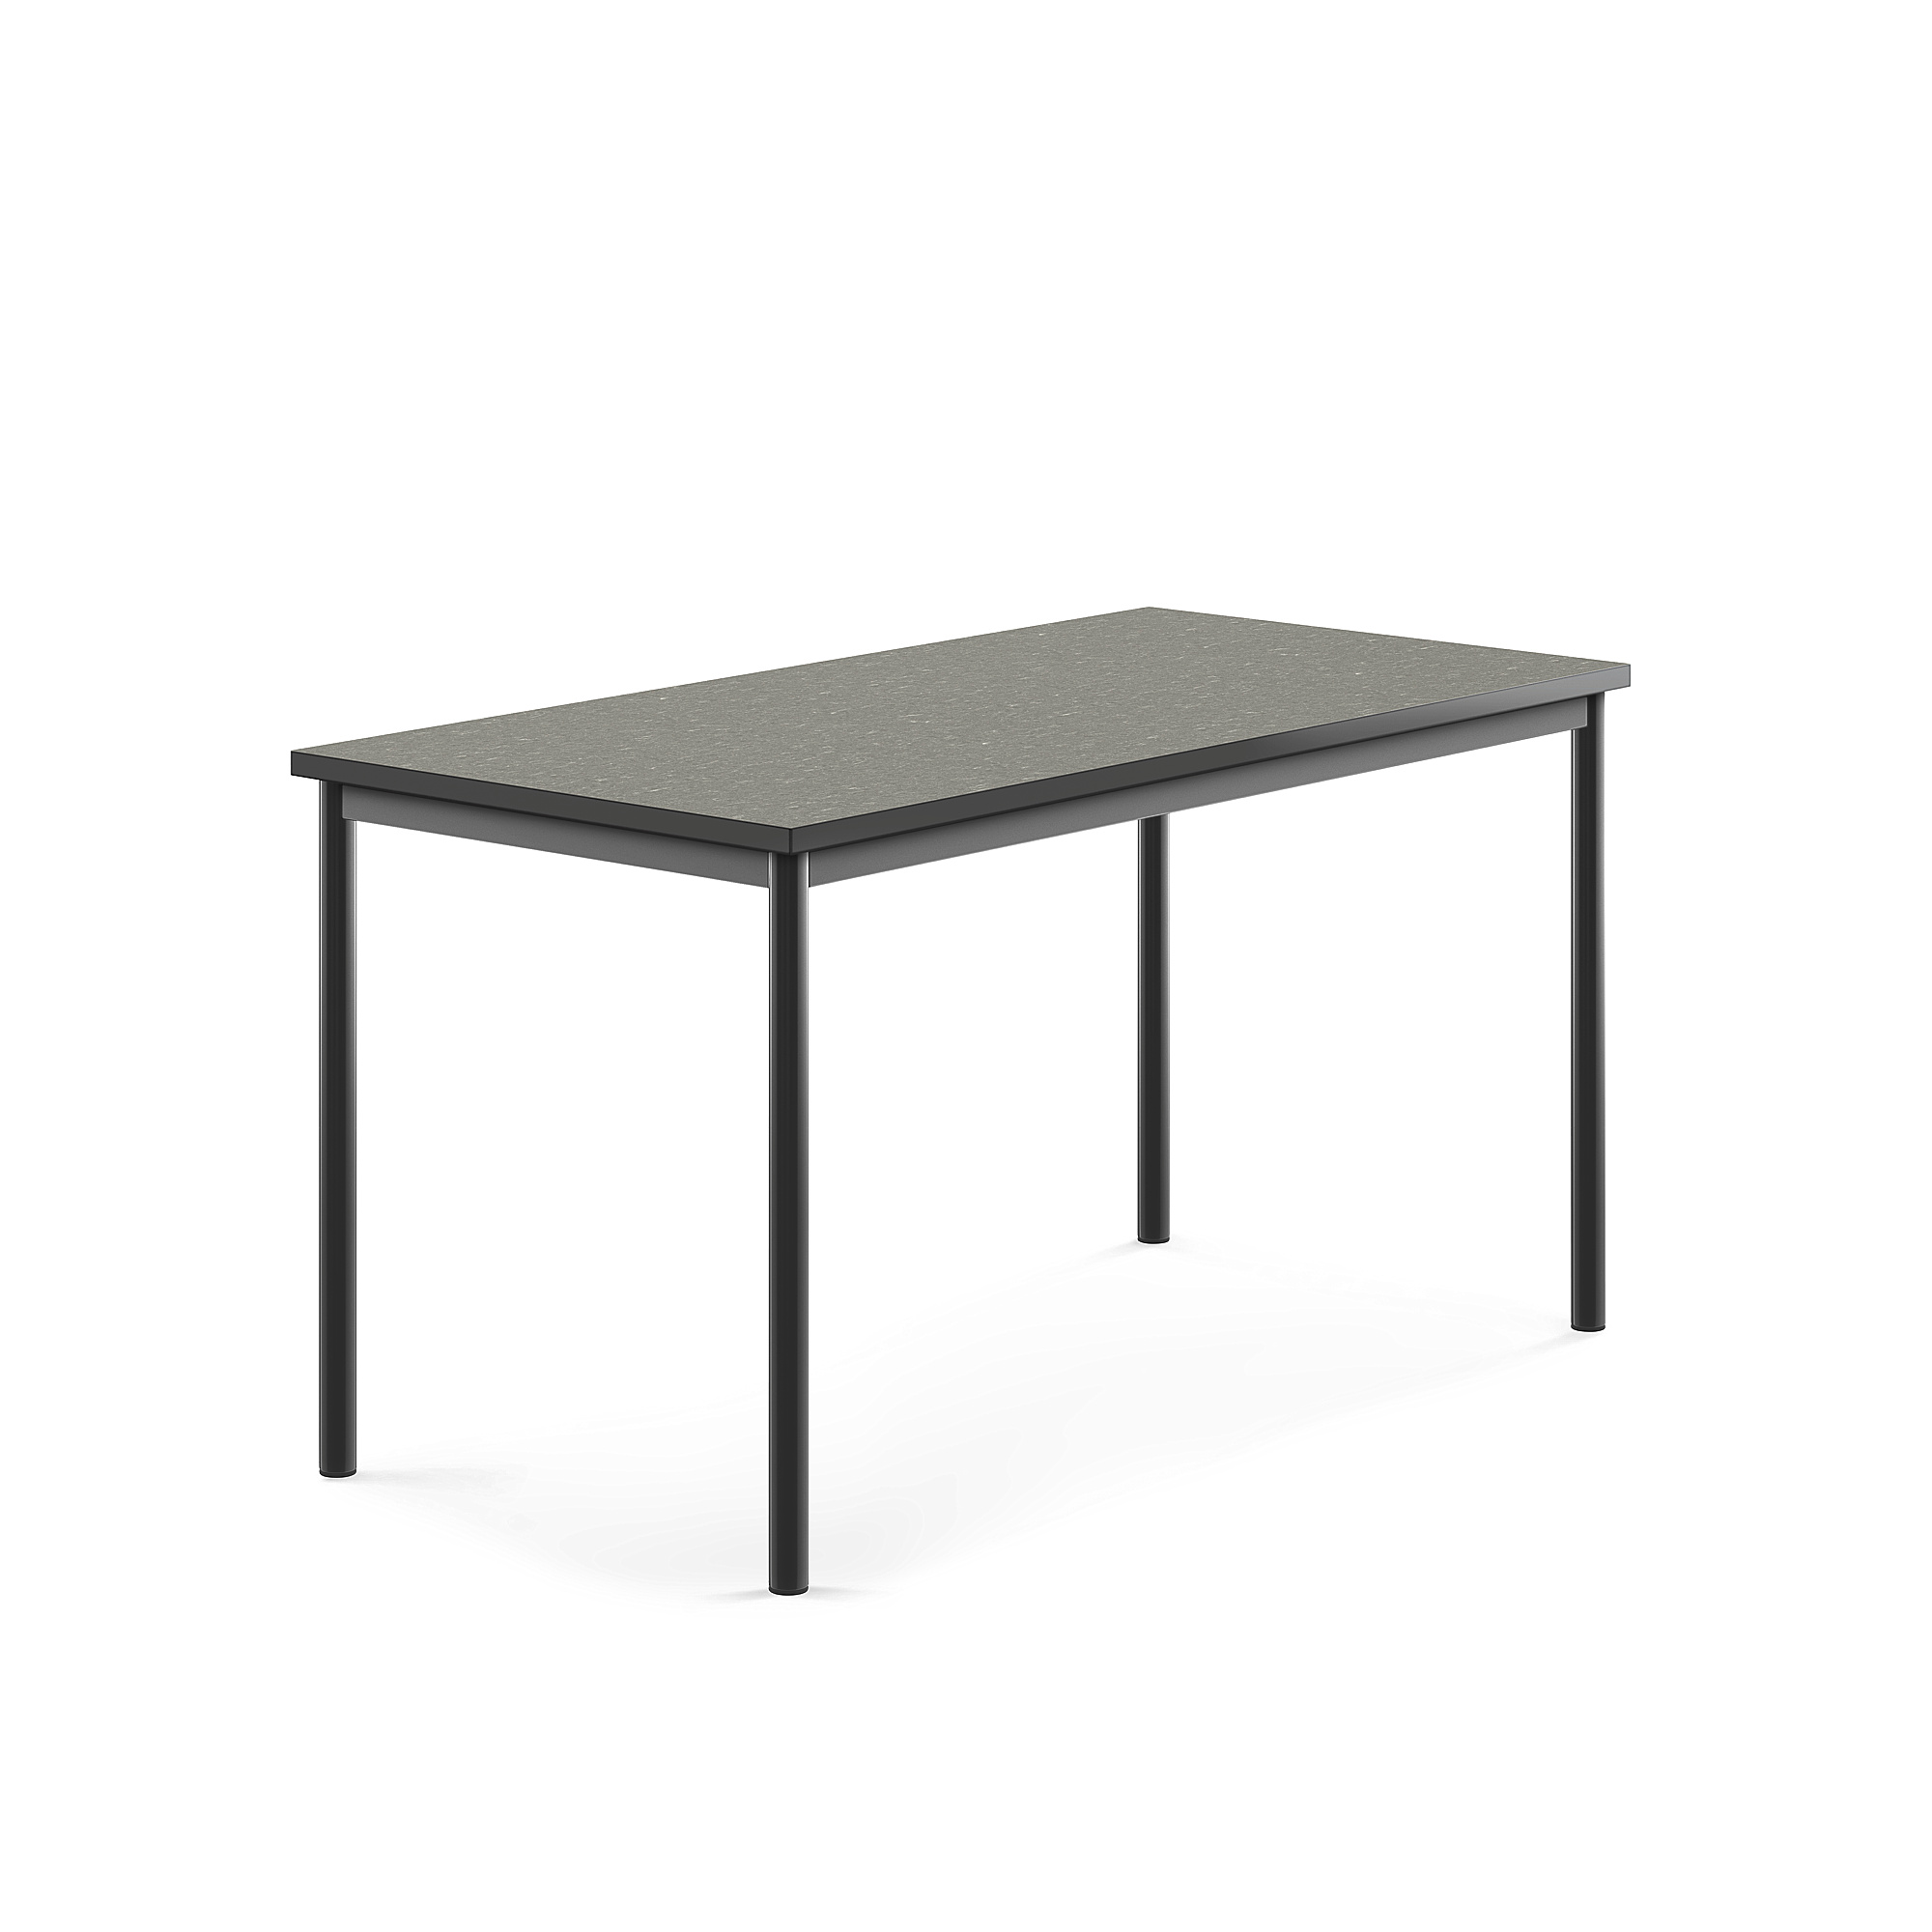 Stůl SONITUS, 1400x700x720 mm, antracitově šedé nohy, deska s linoleem, tmavě šedá